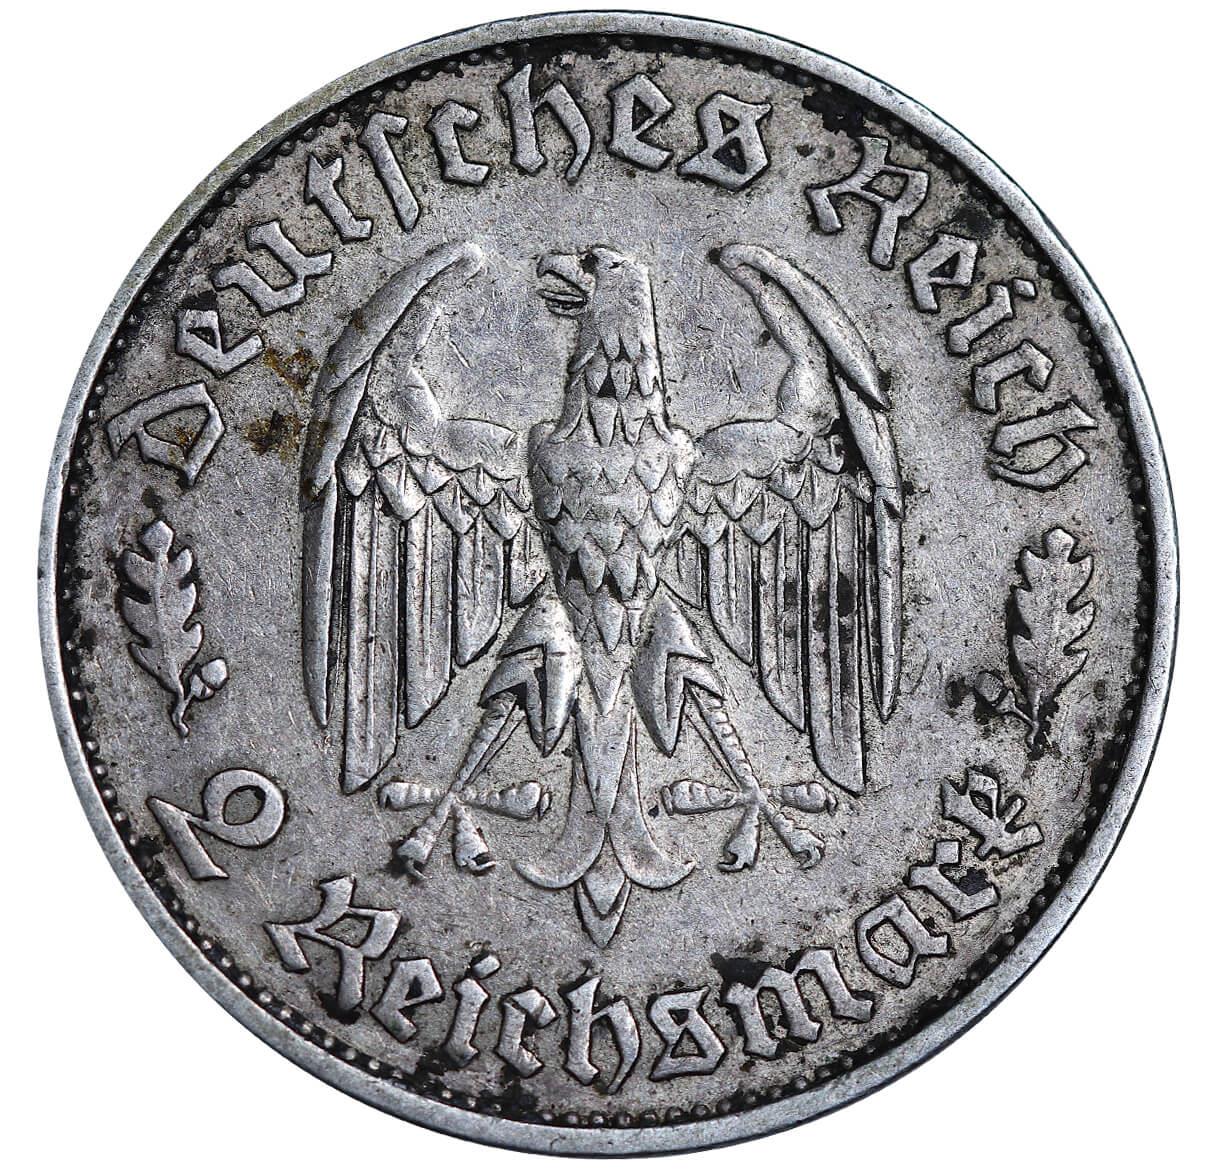 Germany, 2 Reichsmark, 1934 year, F, 175th Anniversary of Friedrich Schiller's Birth - Image 3 of 3